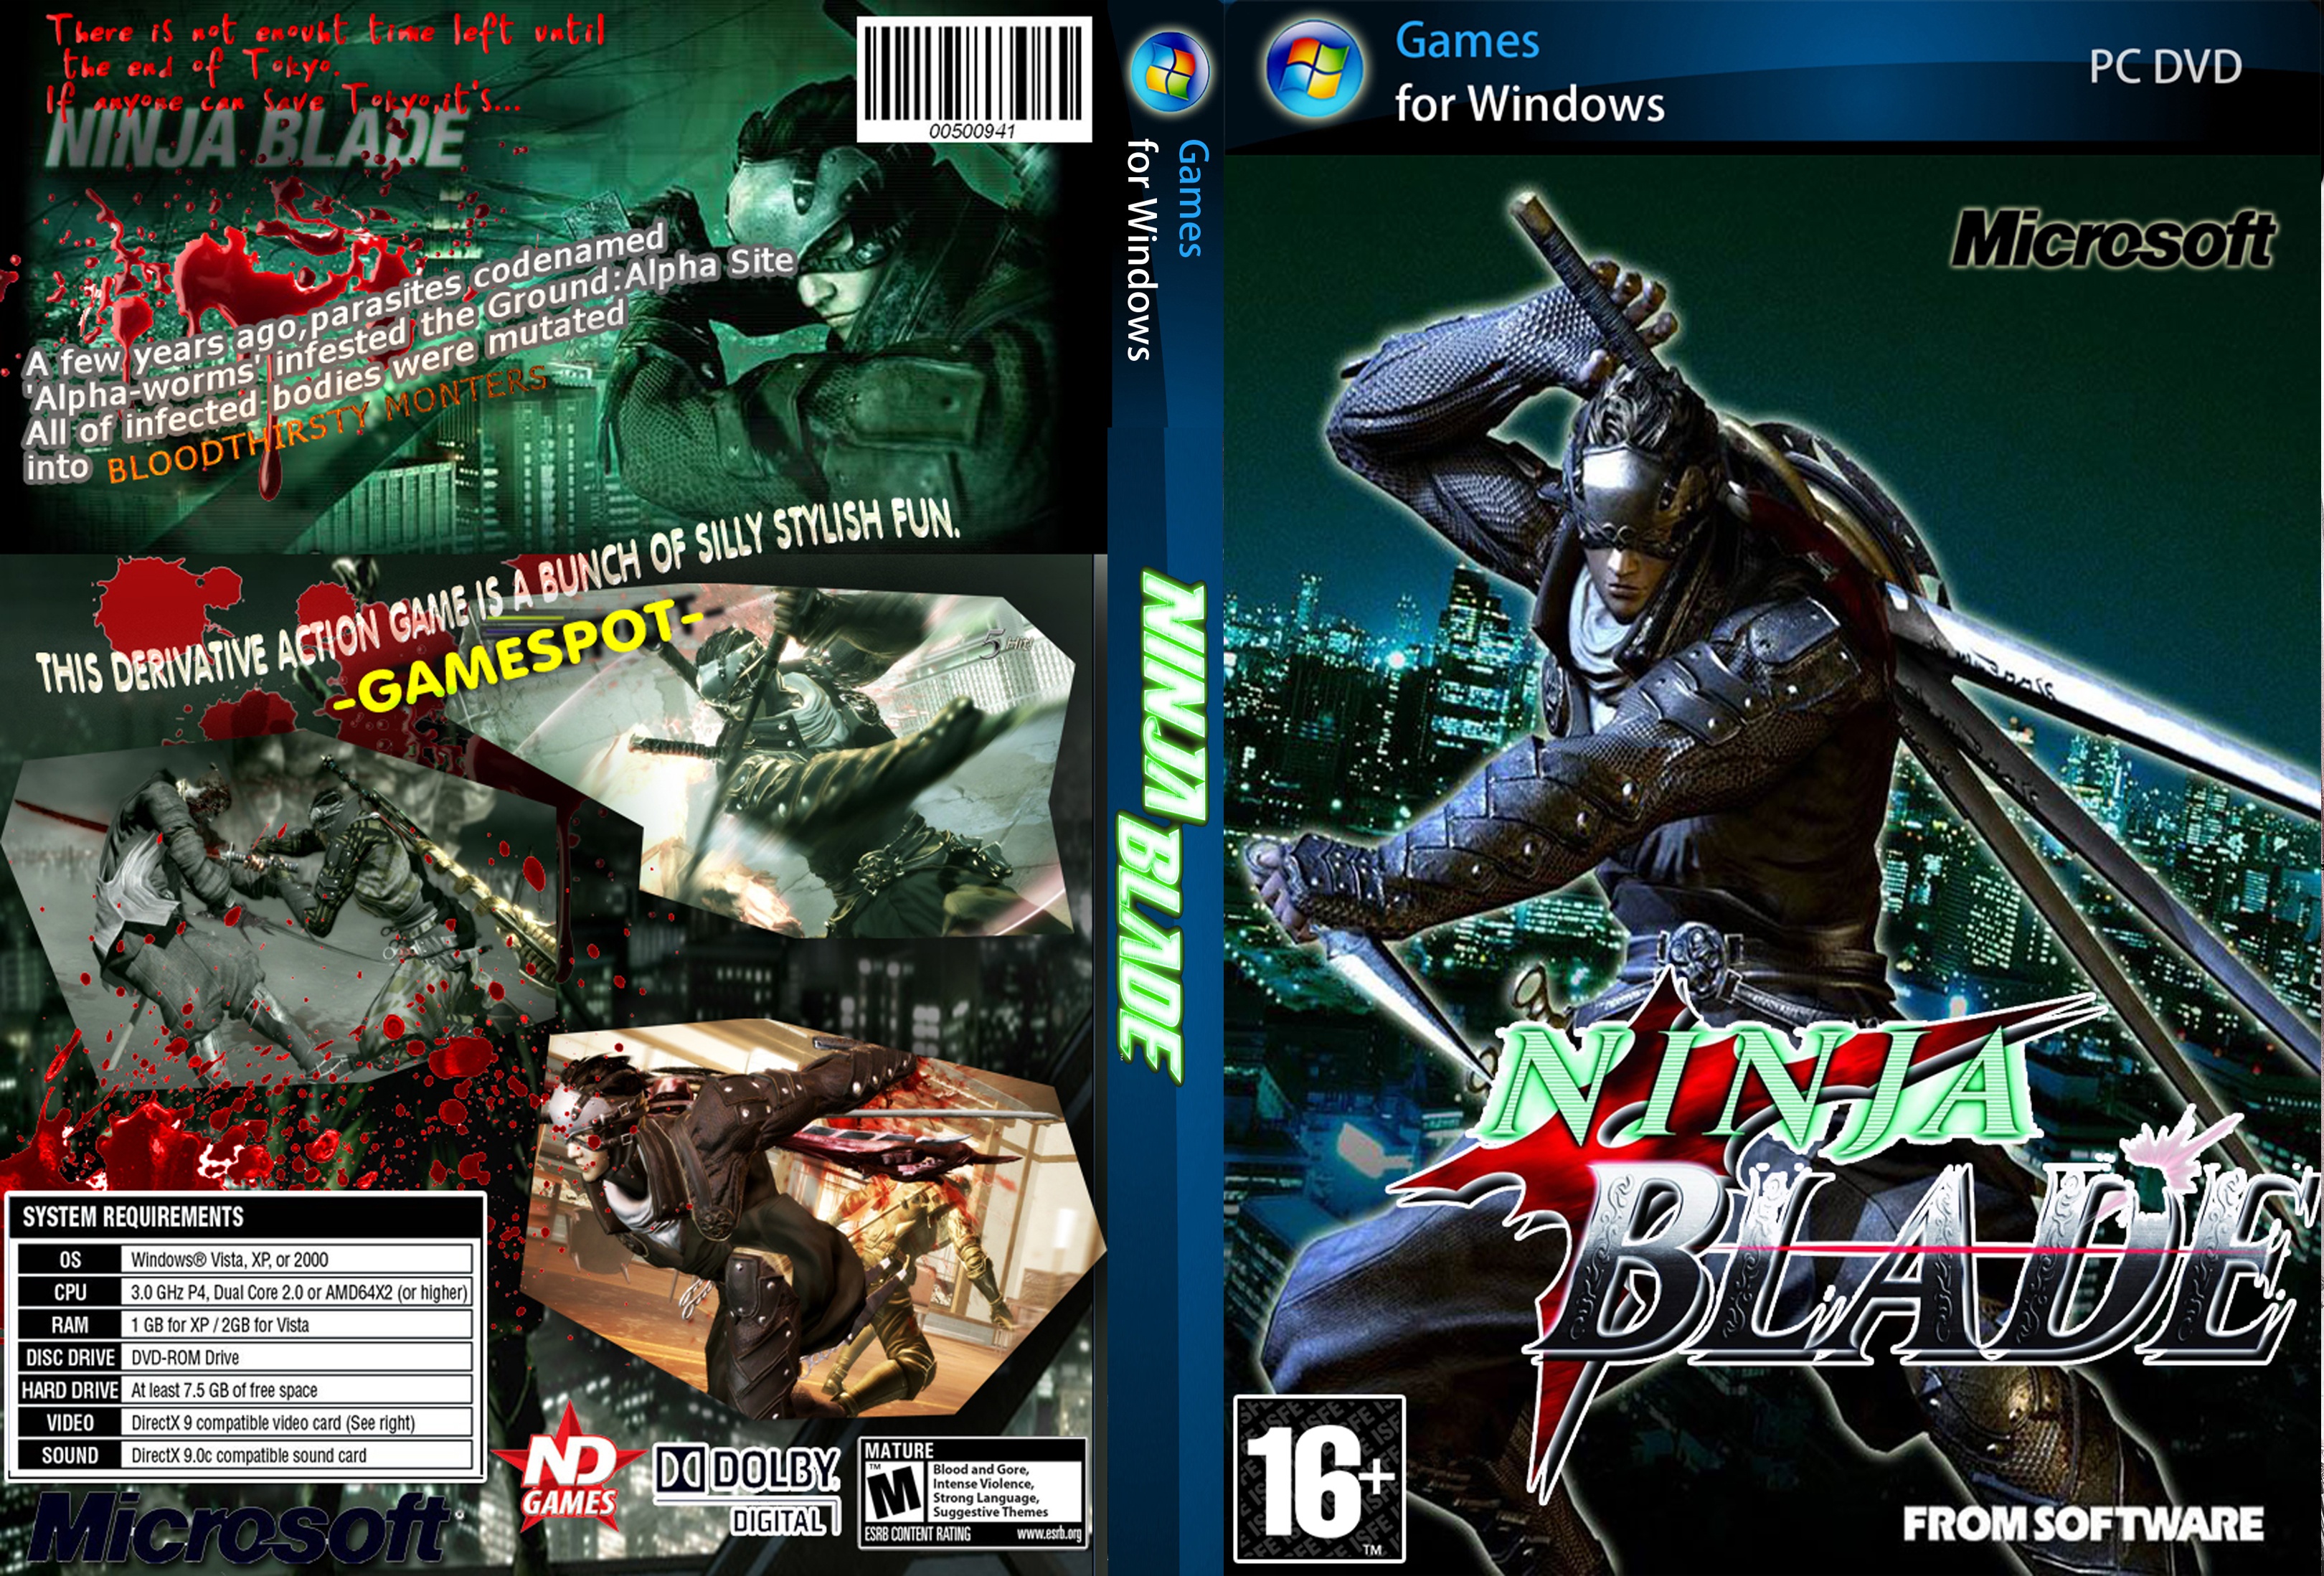 lula 3d pc game dvd cover art